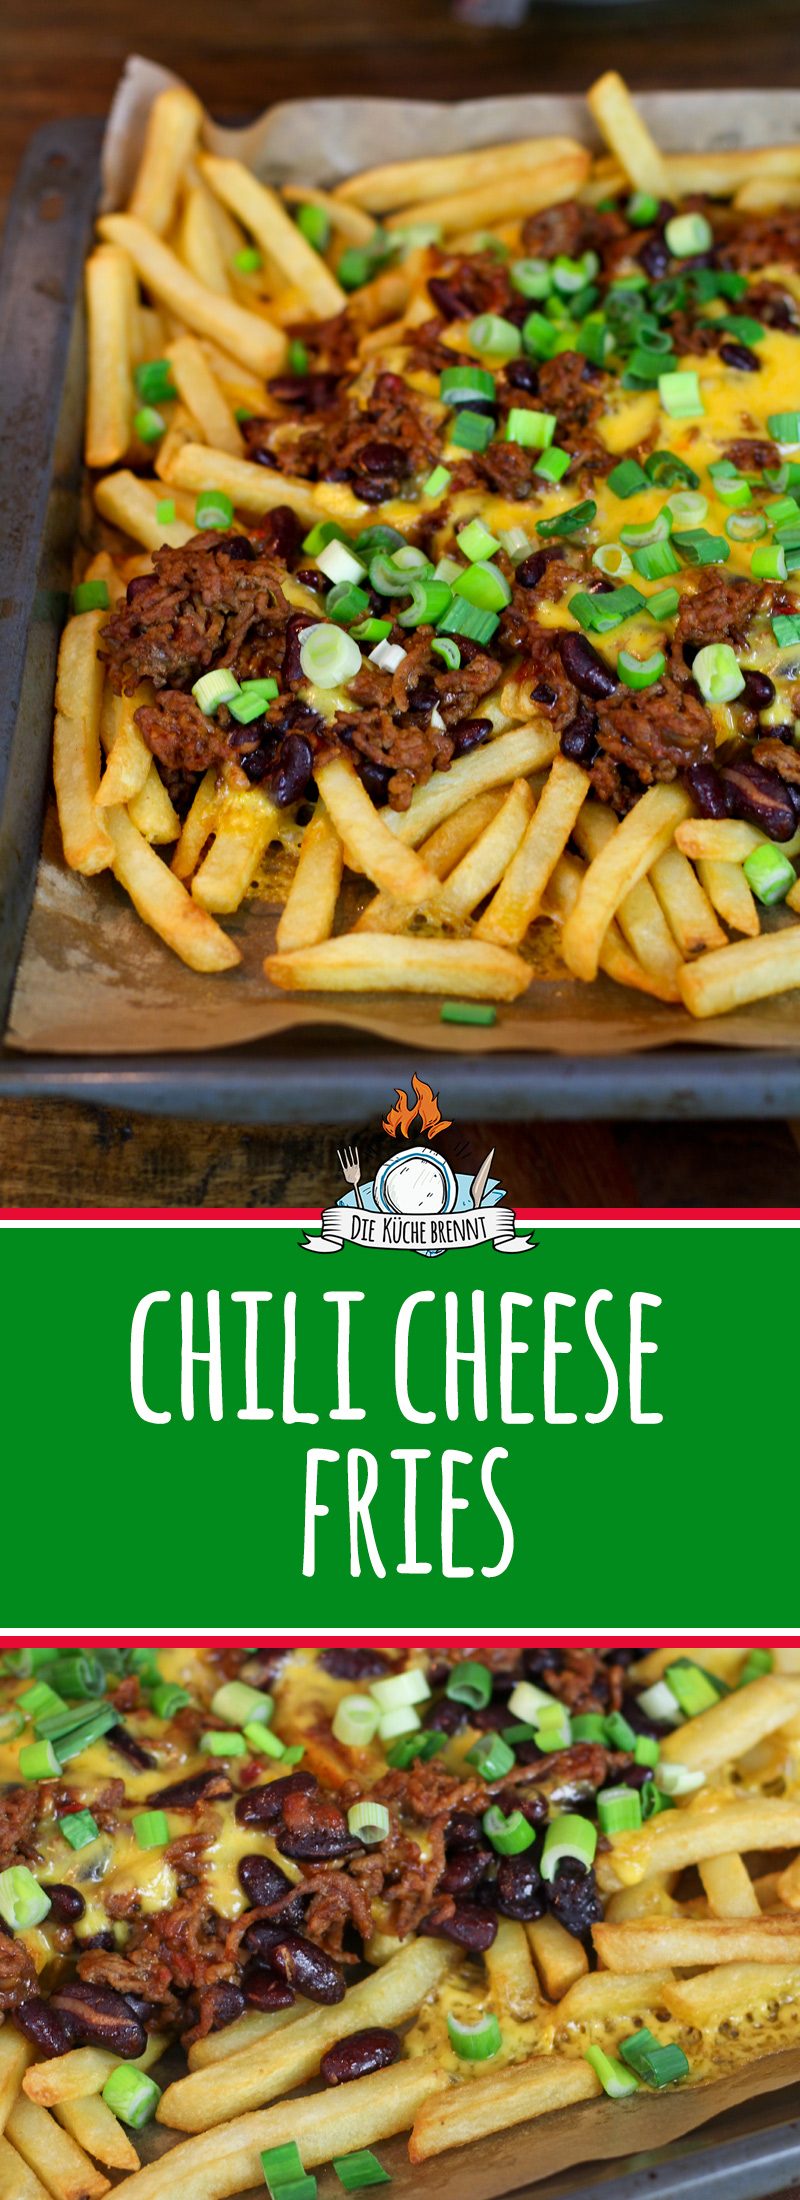 Chili Cheese Fries Rezept - selber machen